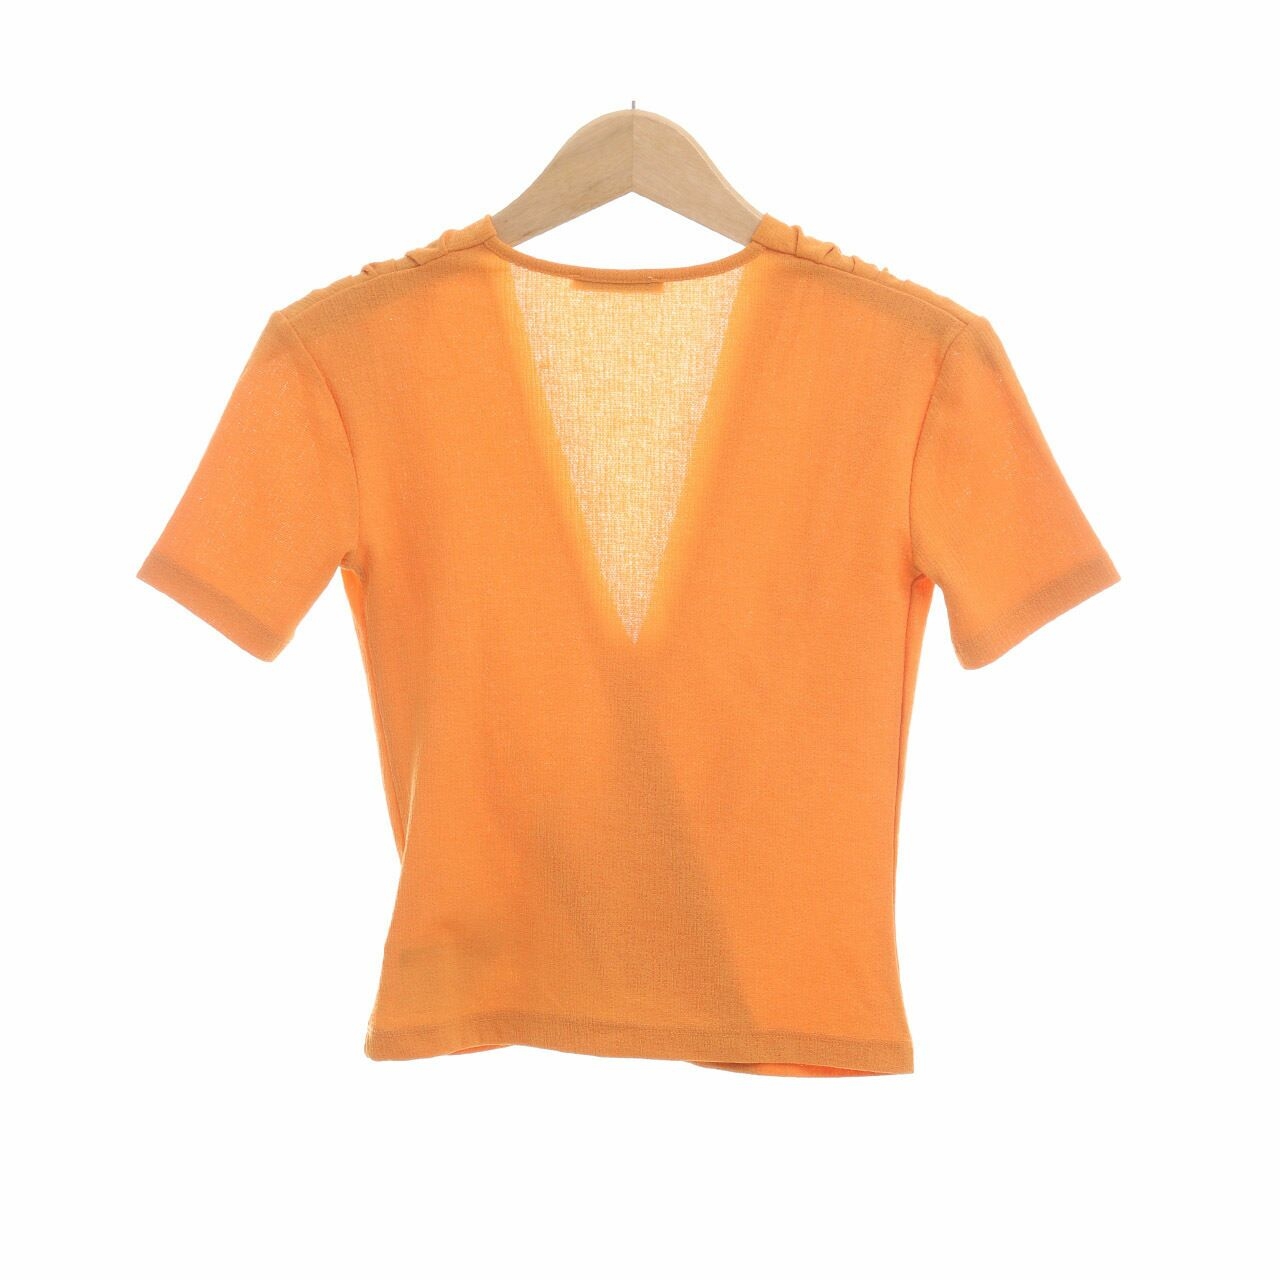 Zara Orange Wrap Blouse